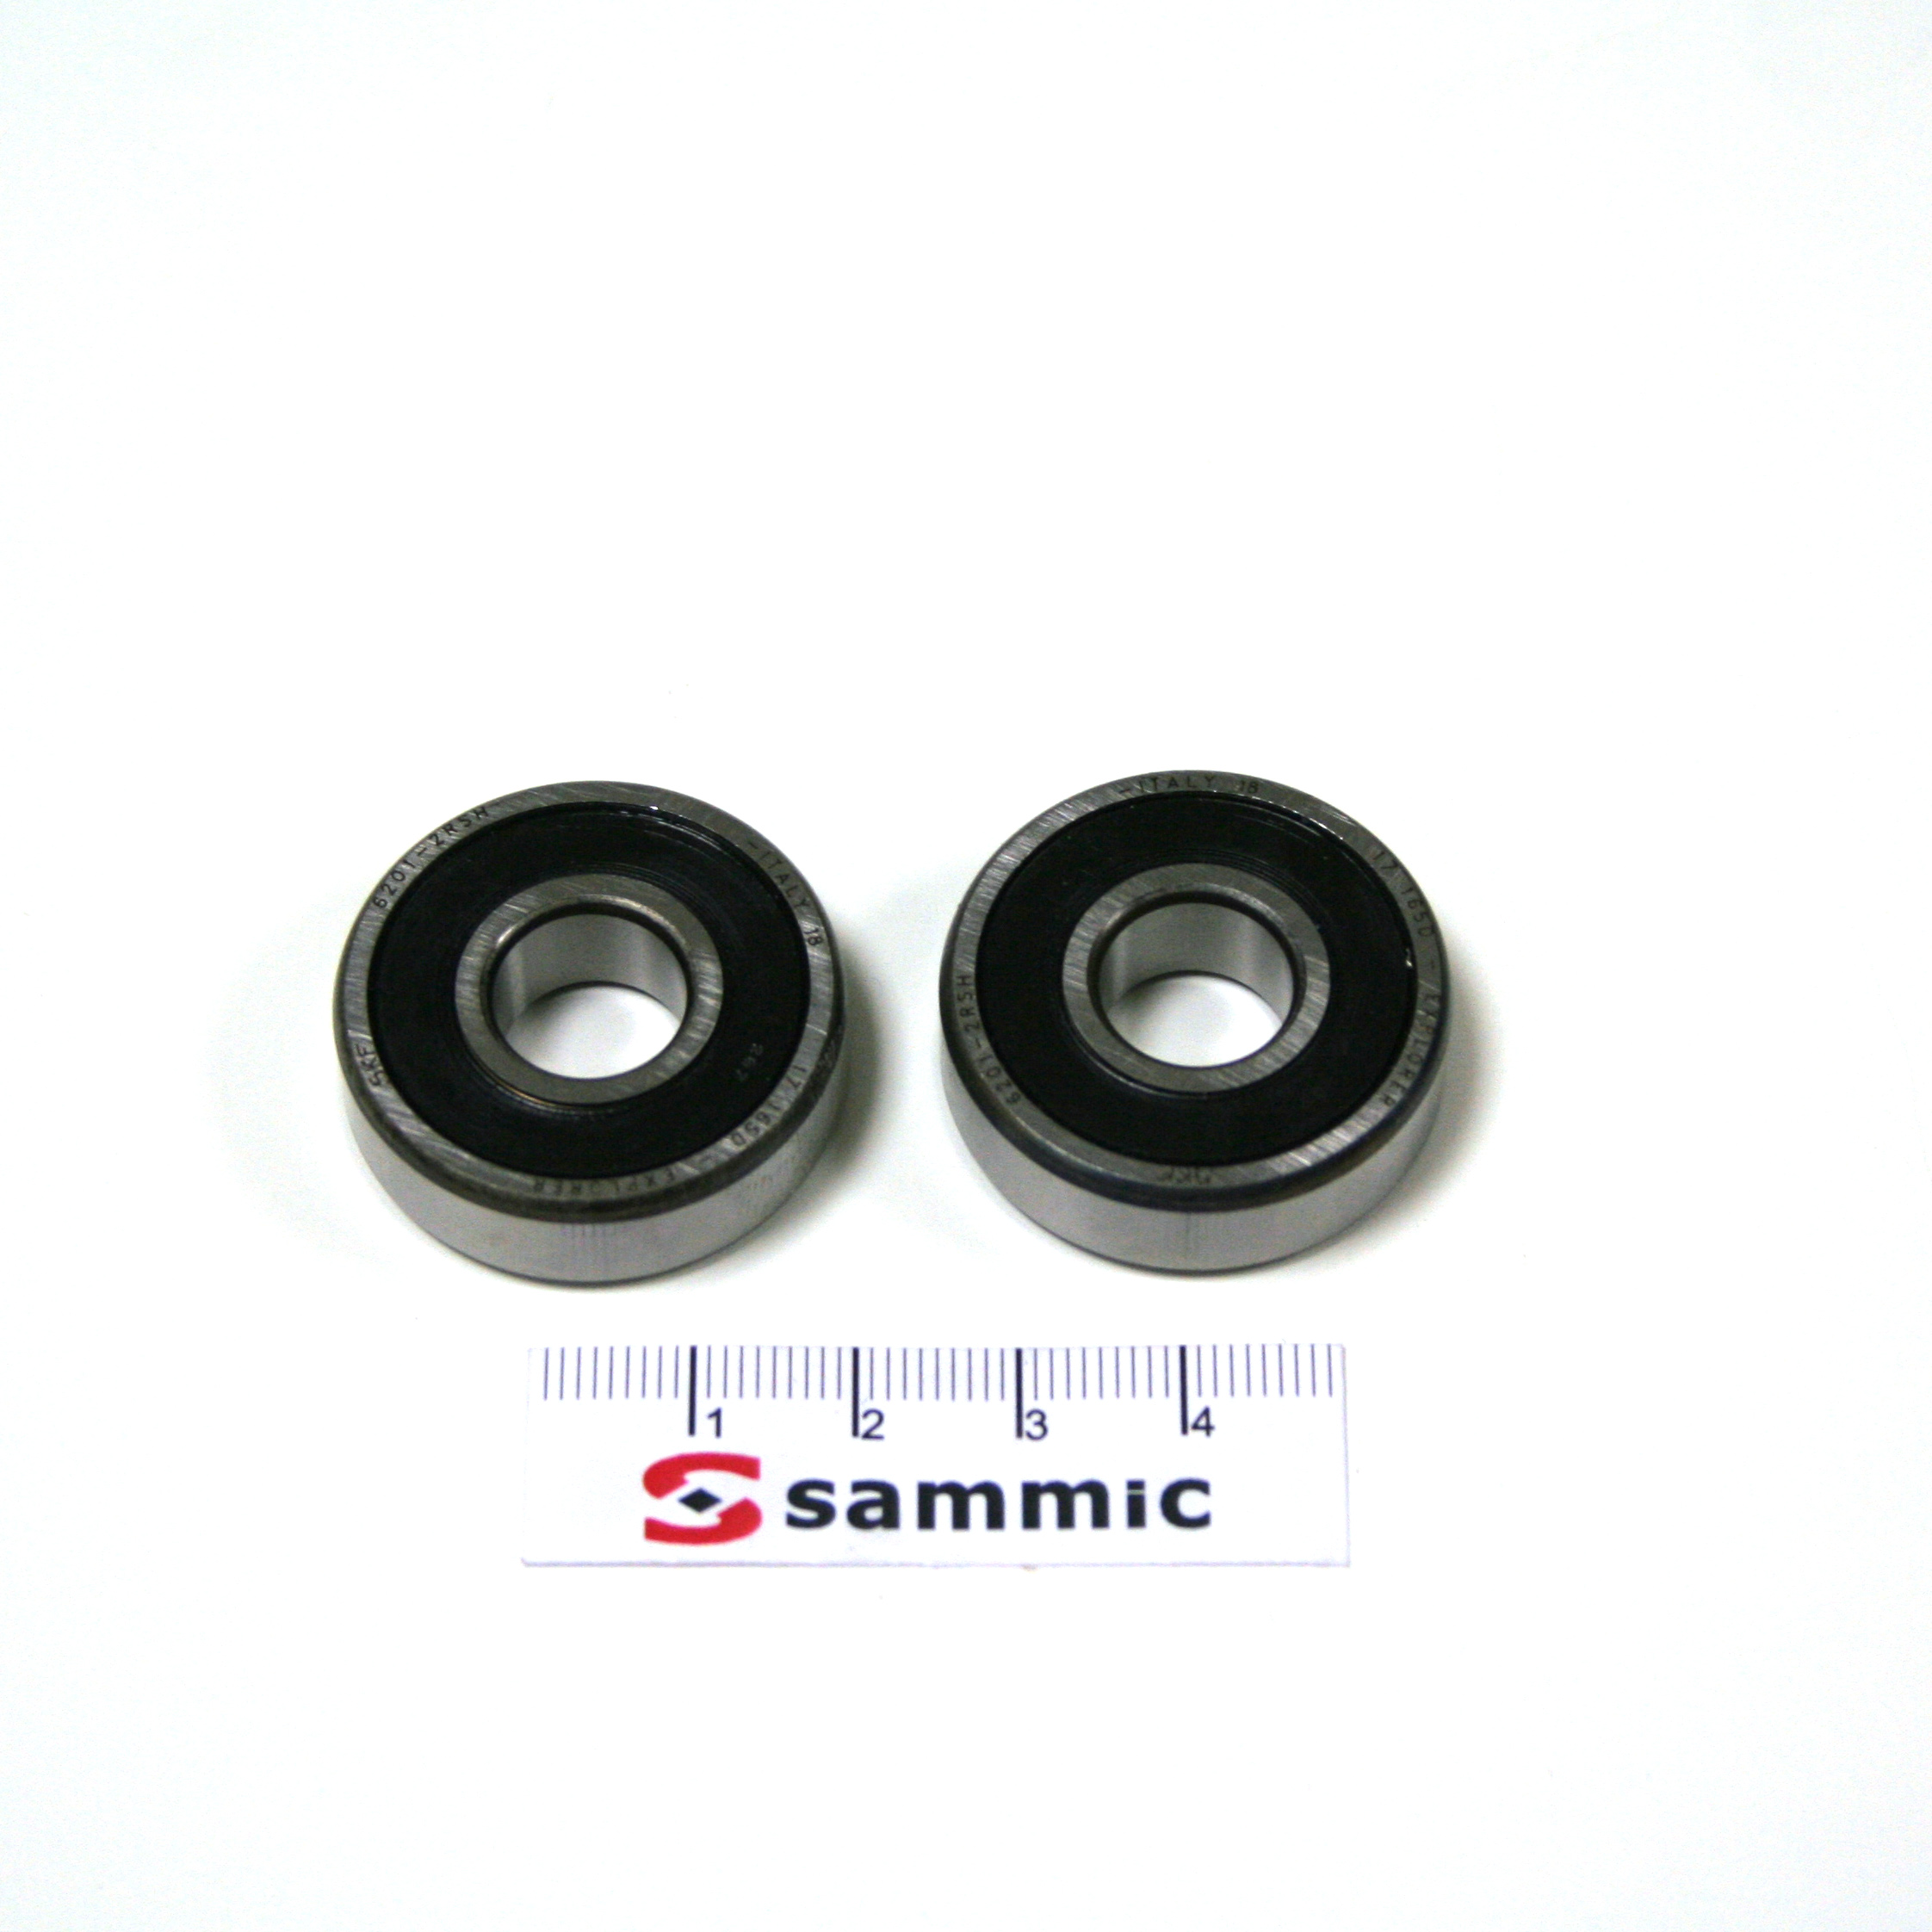 Sammic SK3 Bearing Set 2052750 SFO